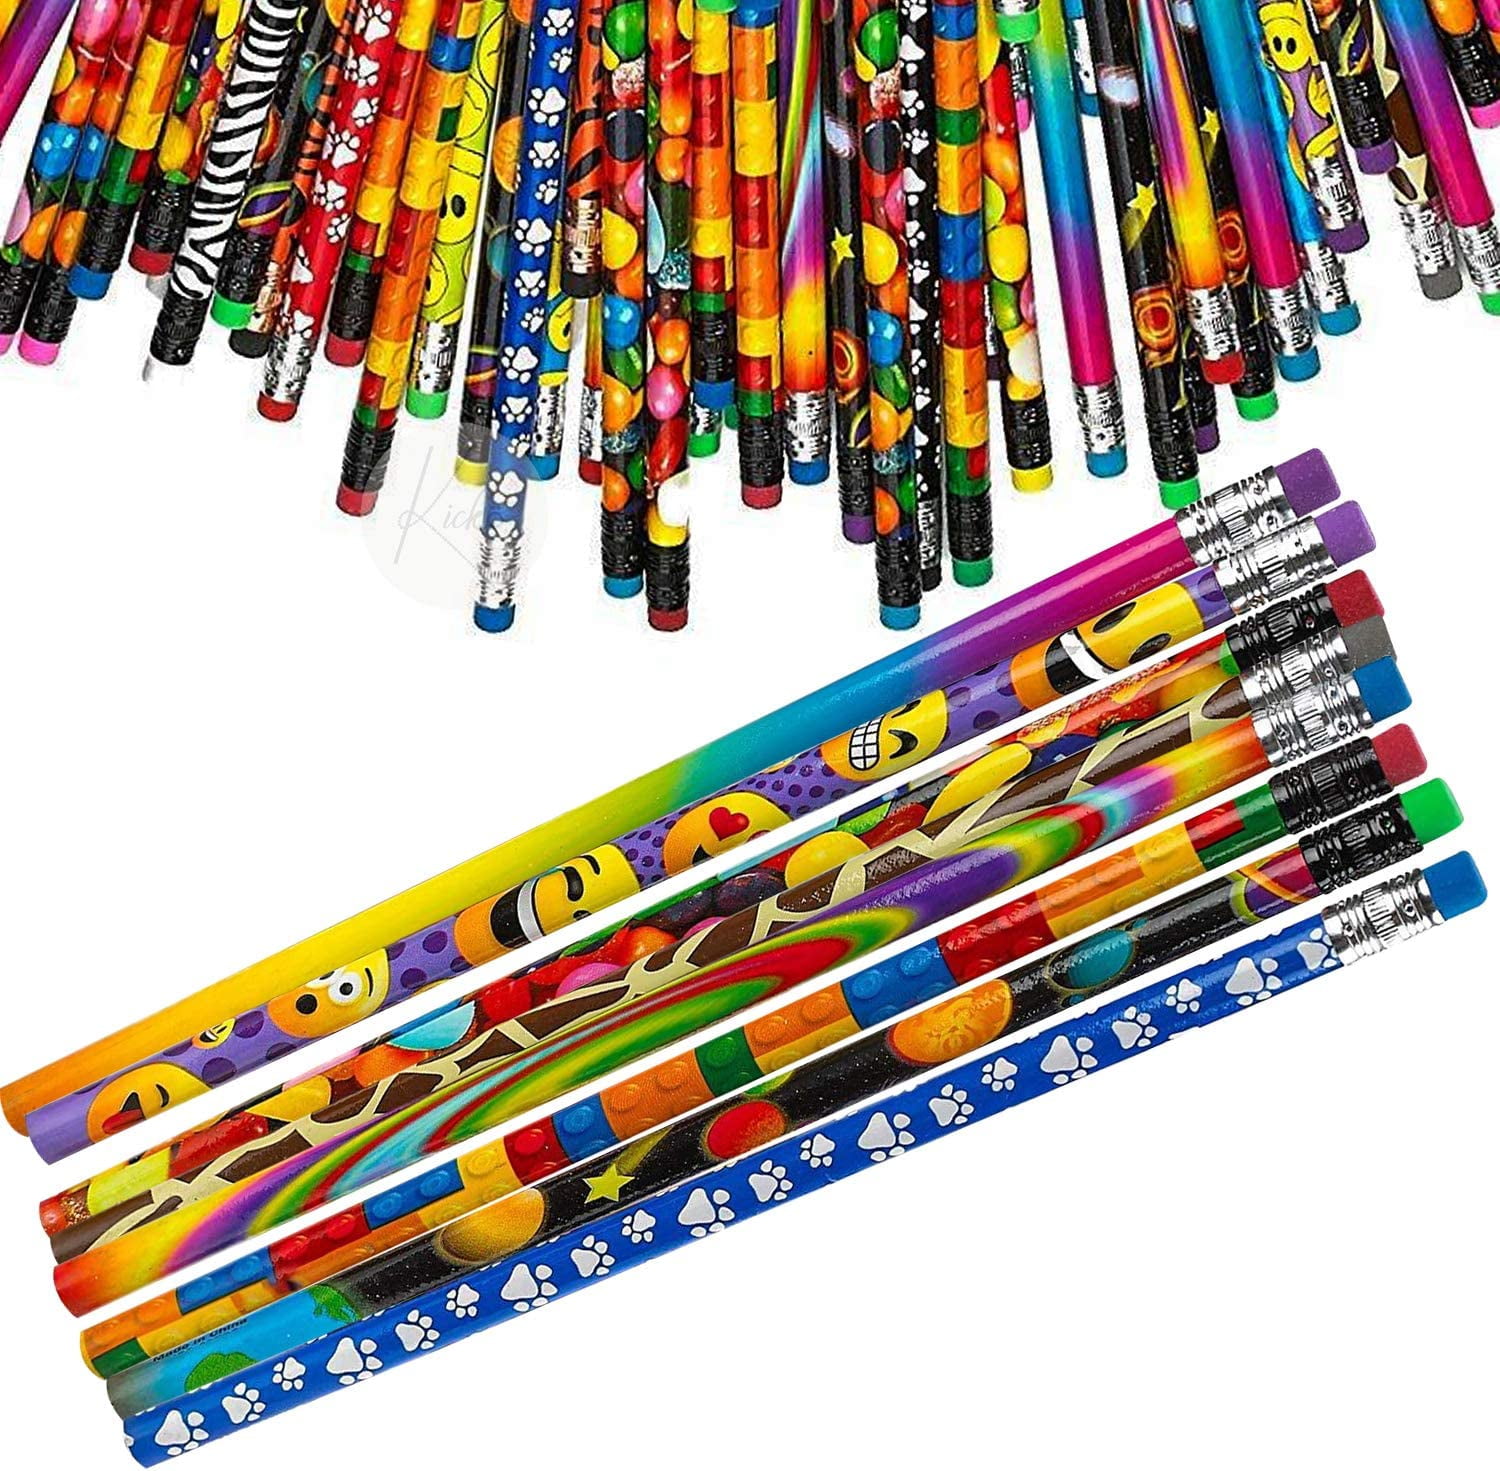 10pcs Cute Pencil Bon Voyage School Novelty Writing Wooden Pencil For Kids RS 